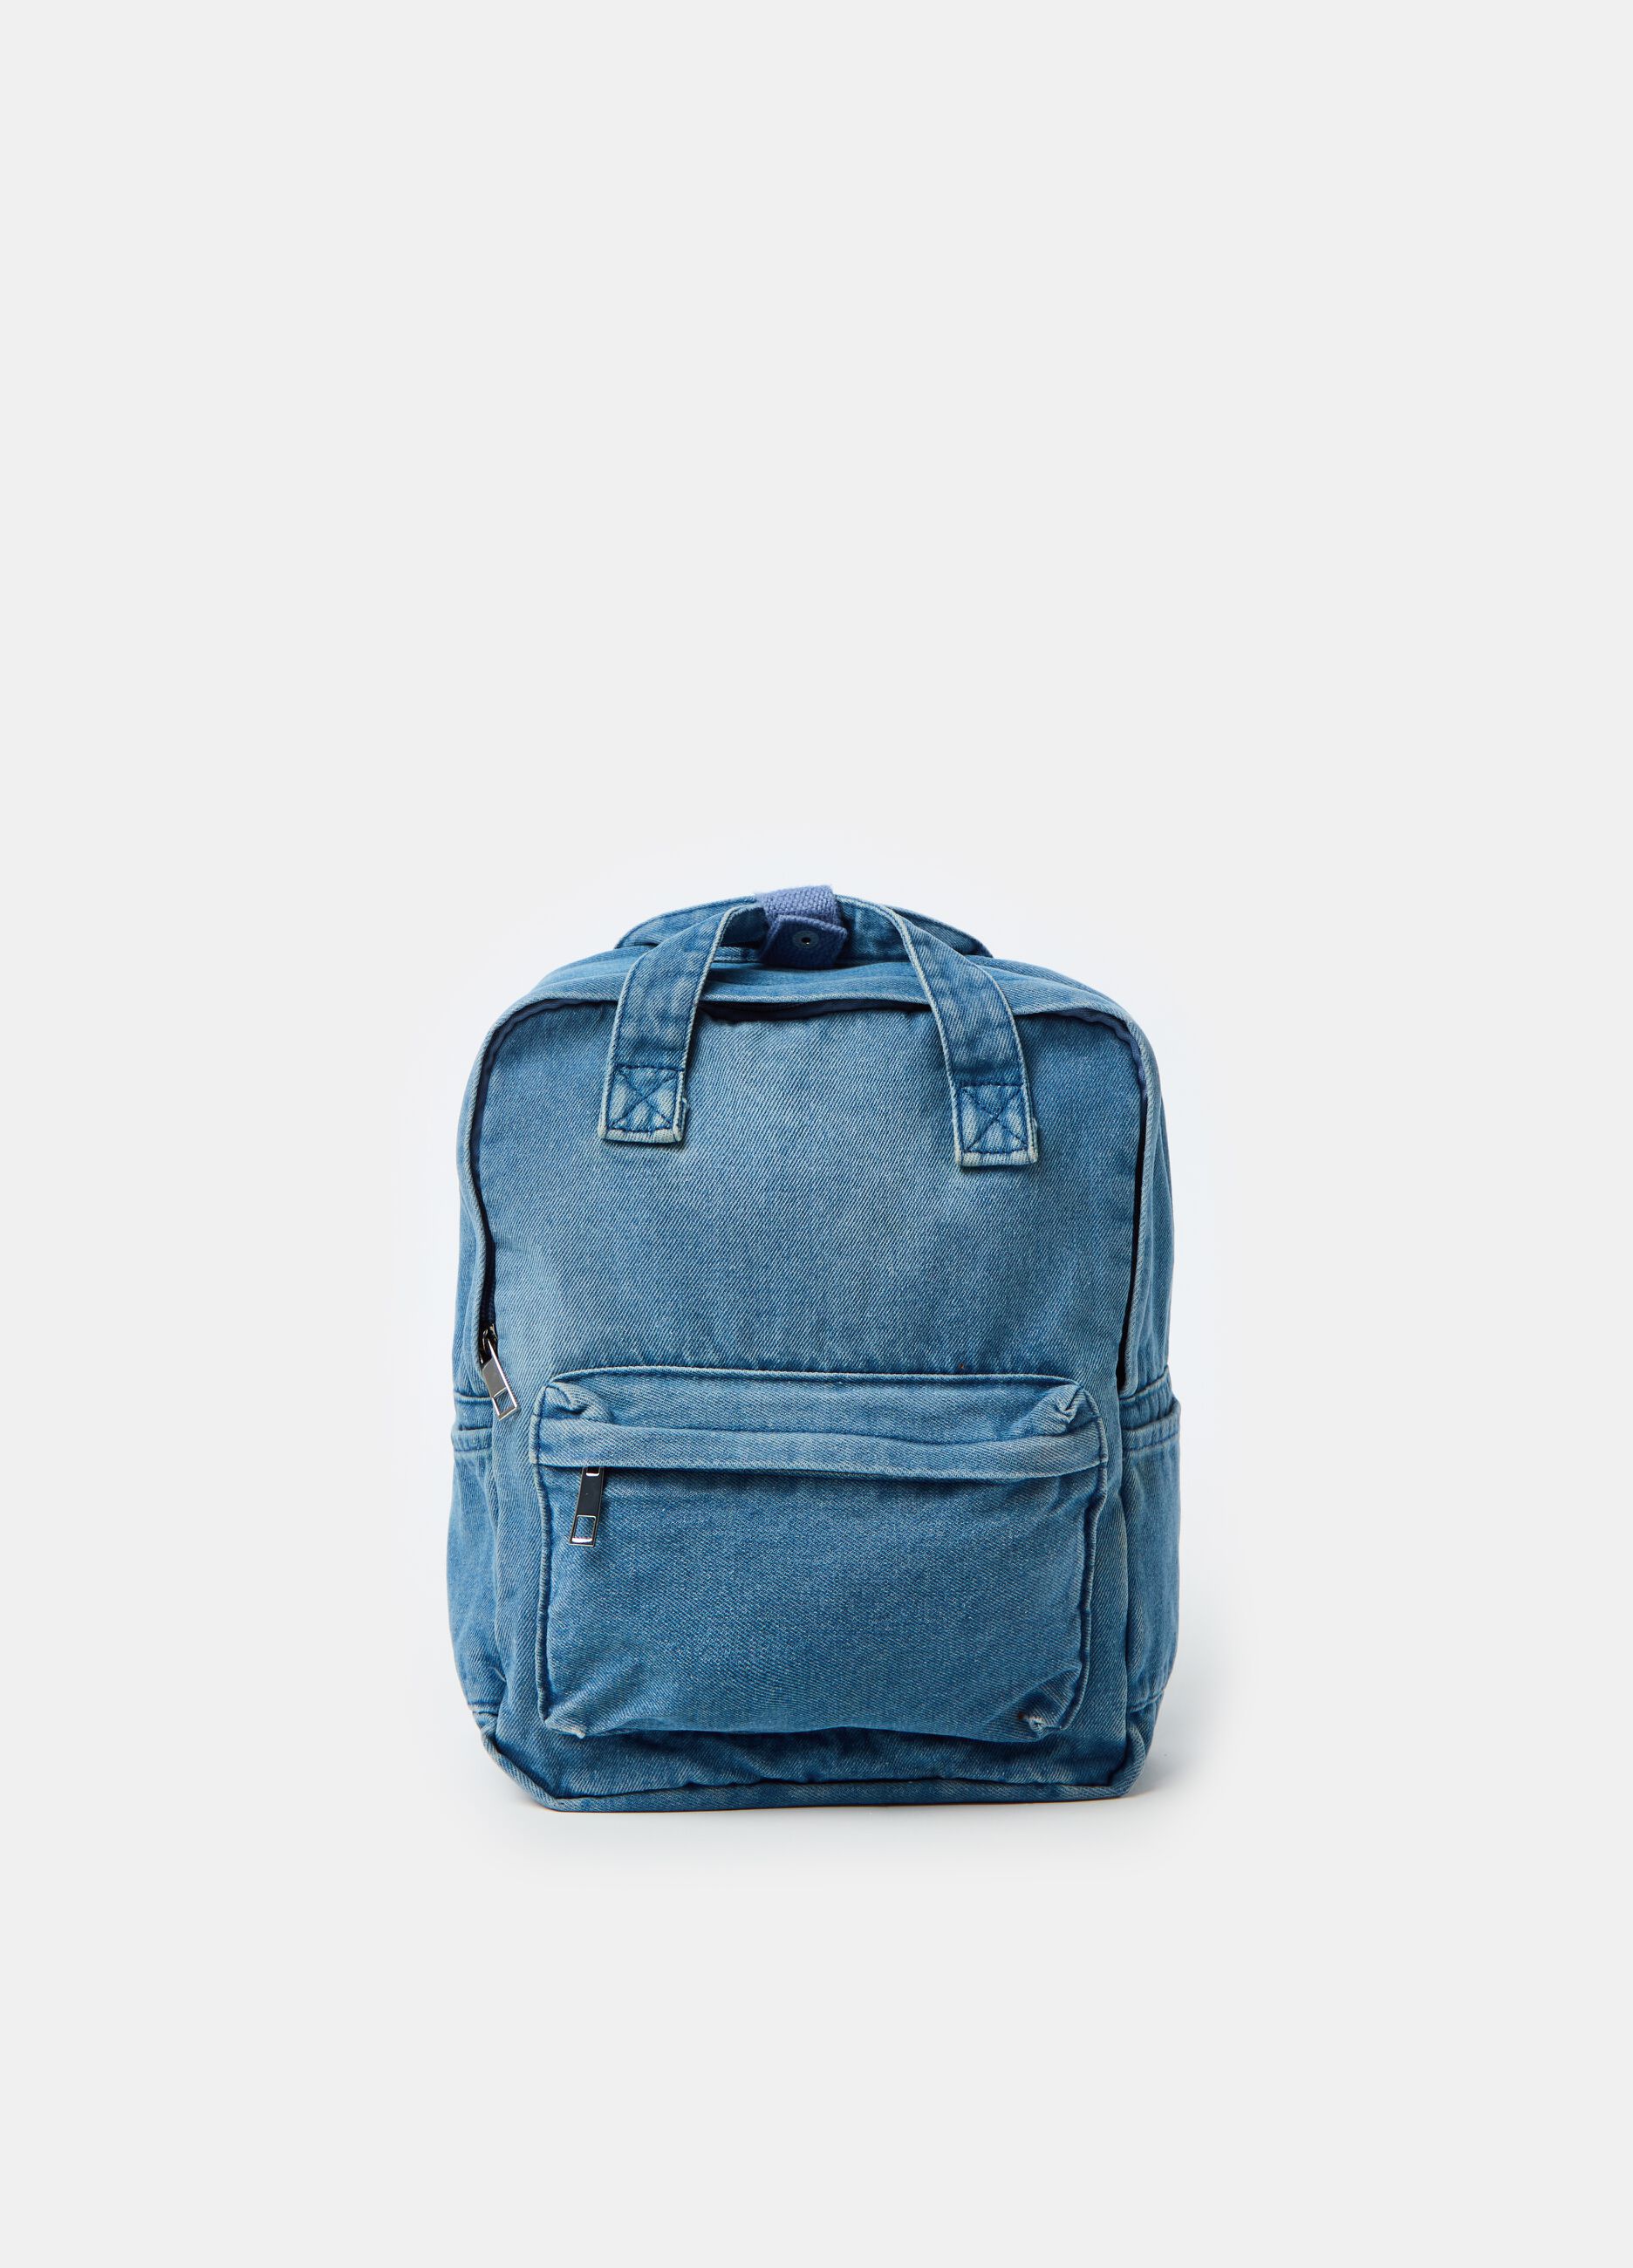 Small denim backpack